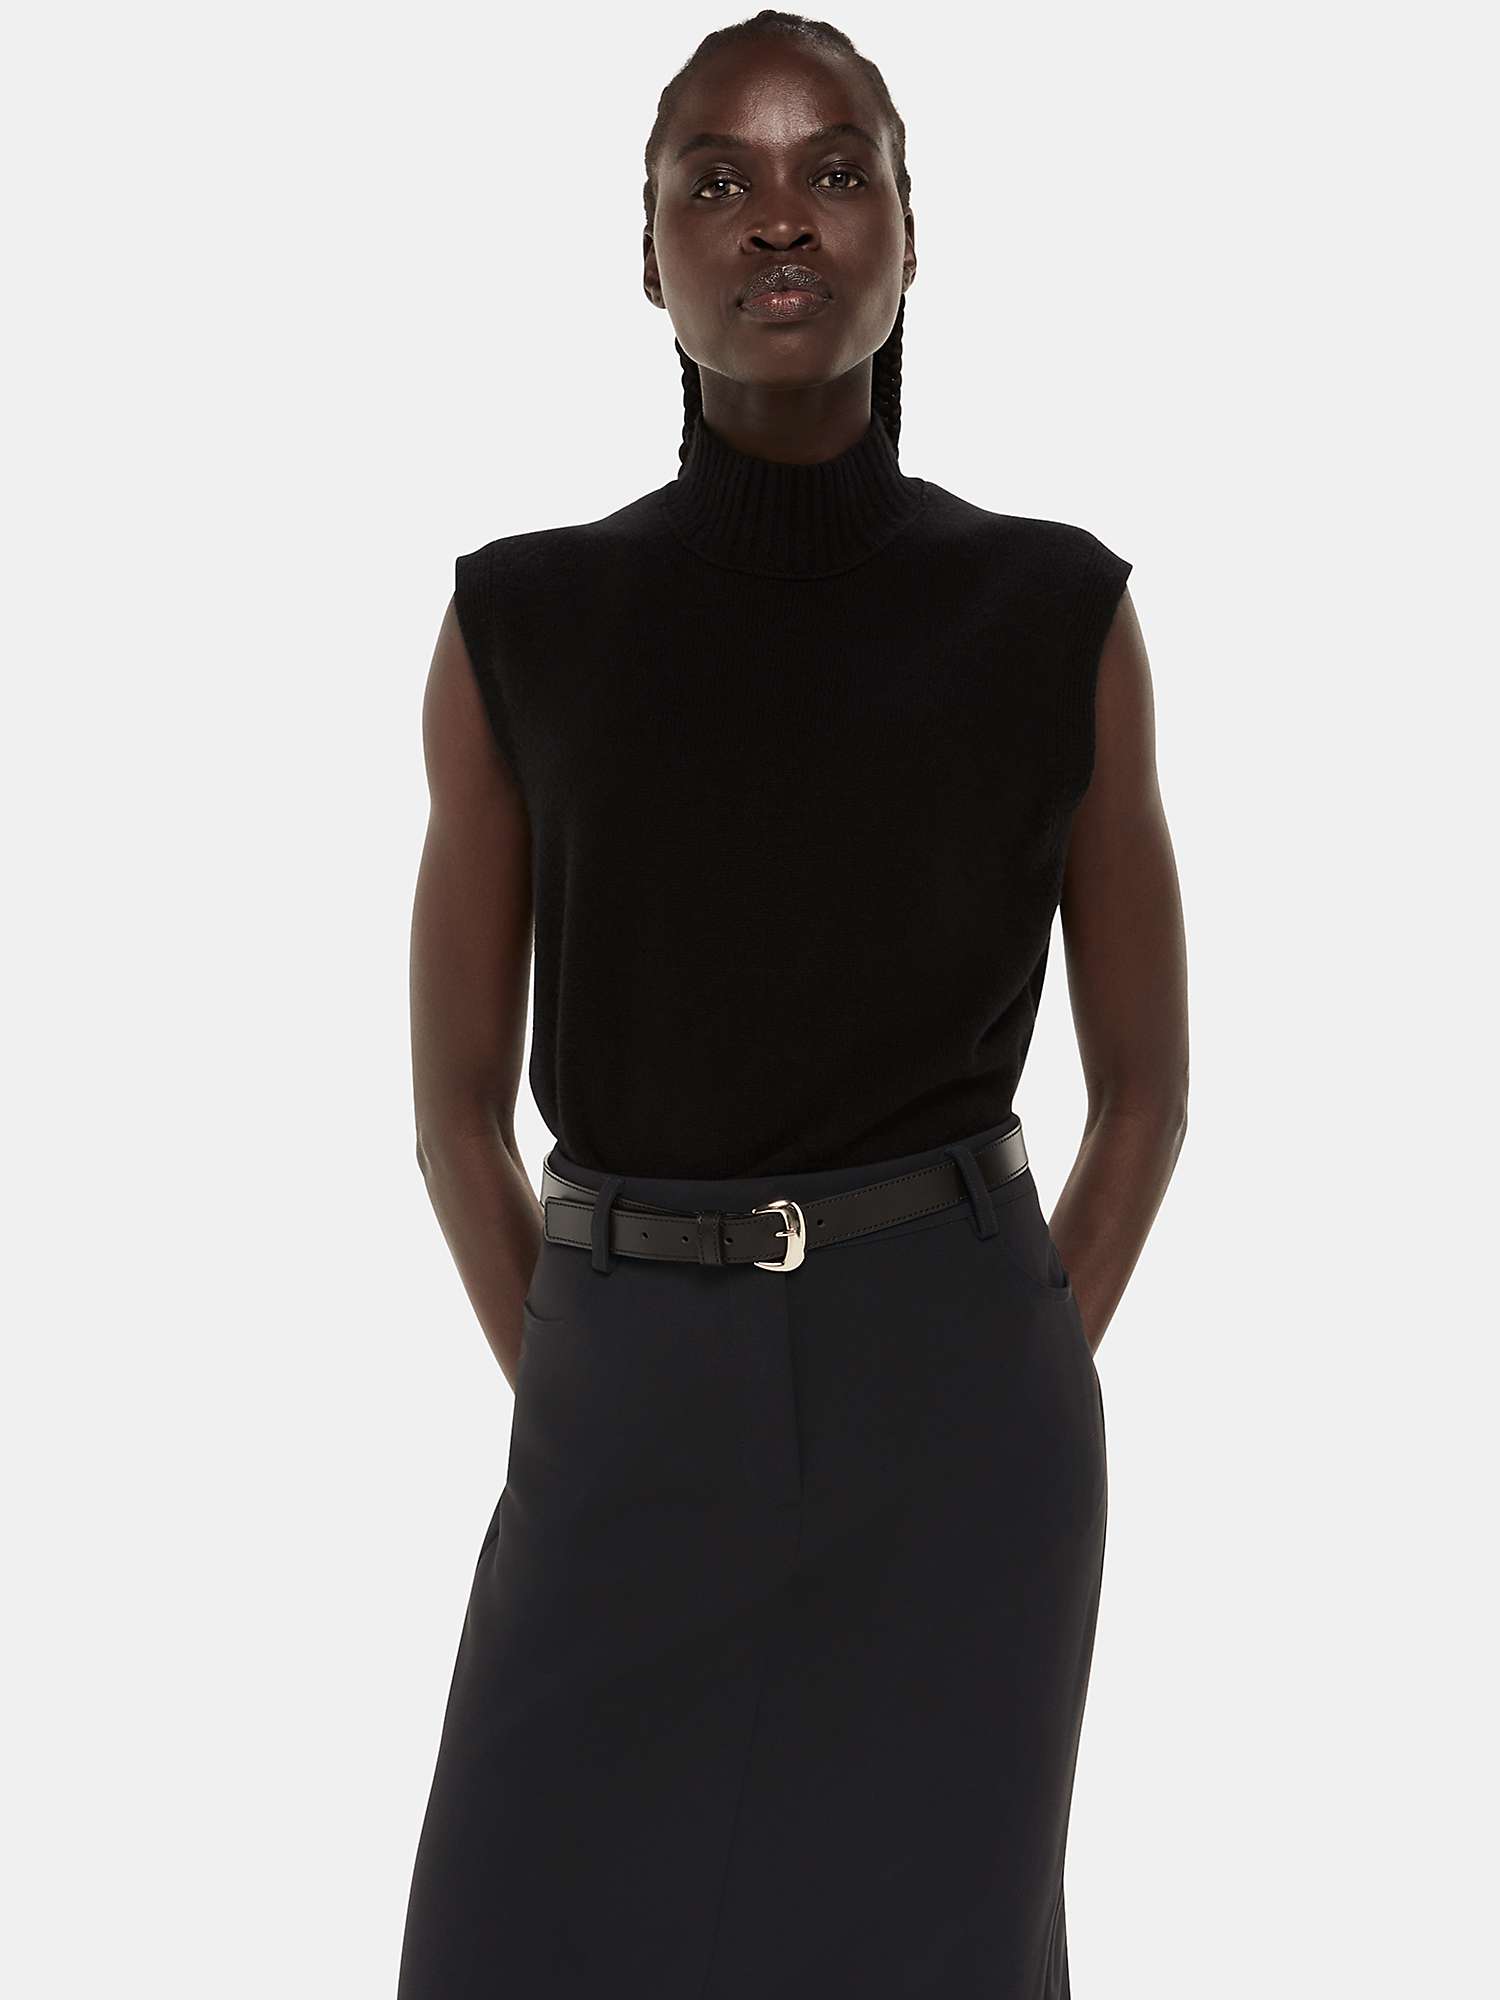 Buy Whistles Petite Abigail Tailored Midi Skirt, Black Online at johnlewis.com